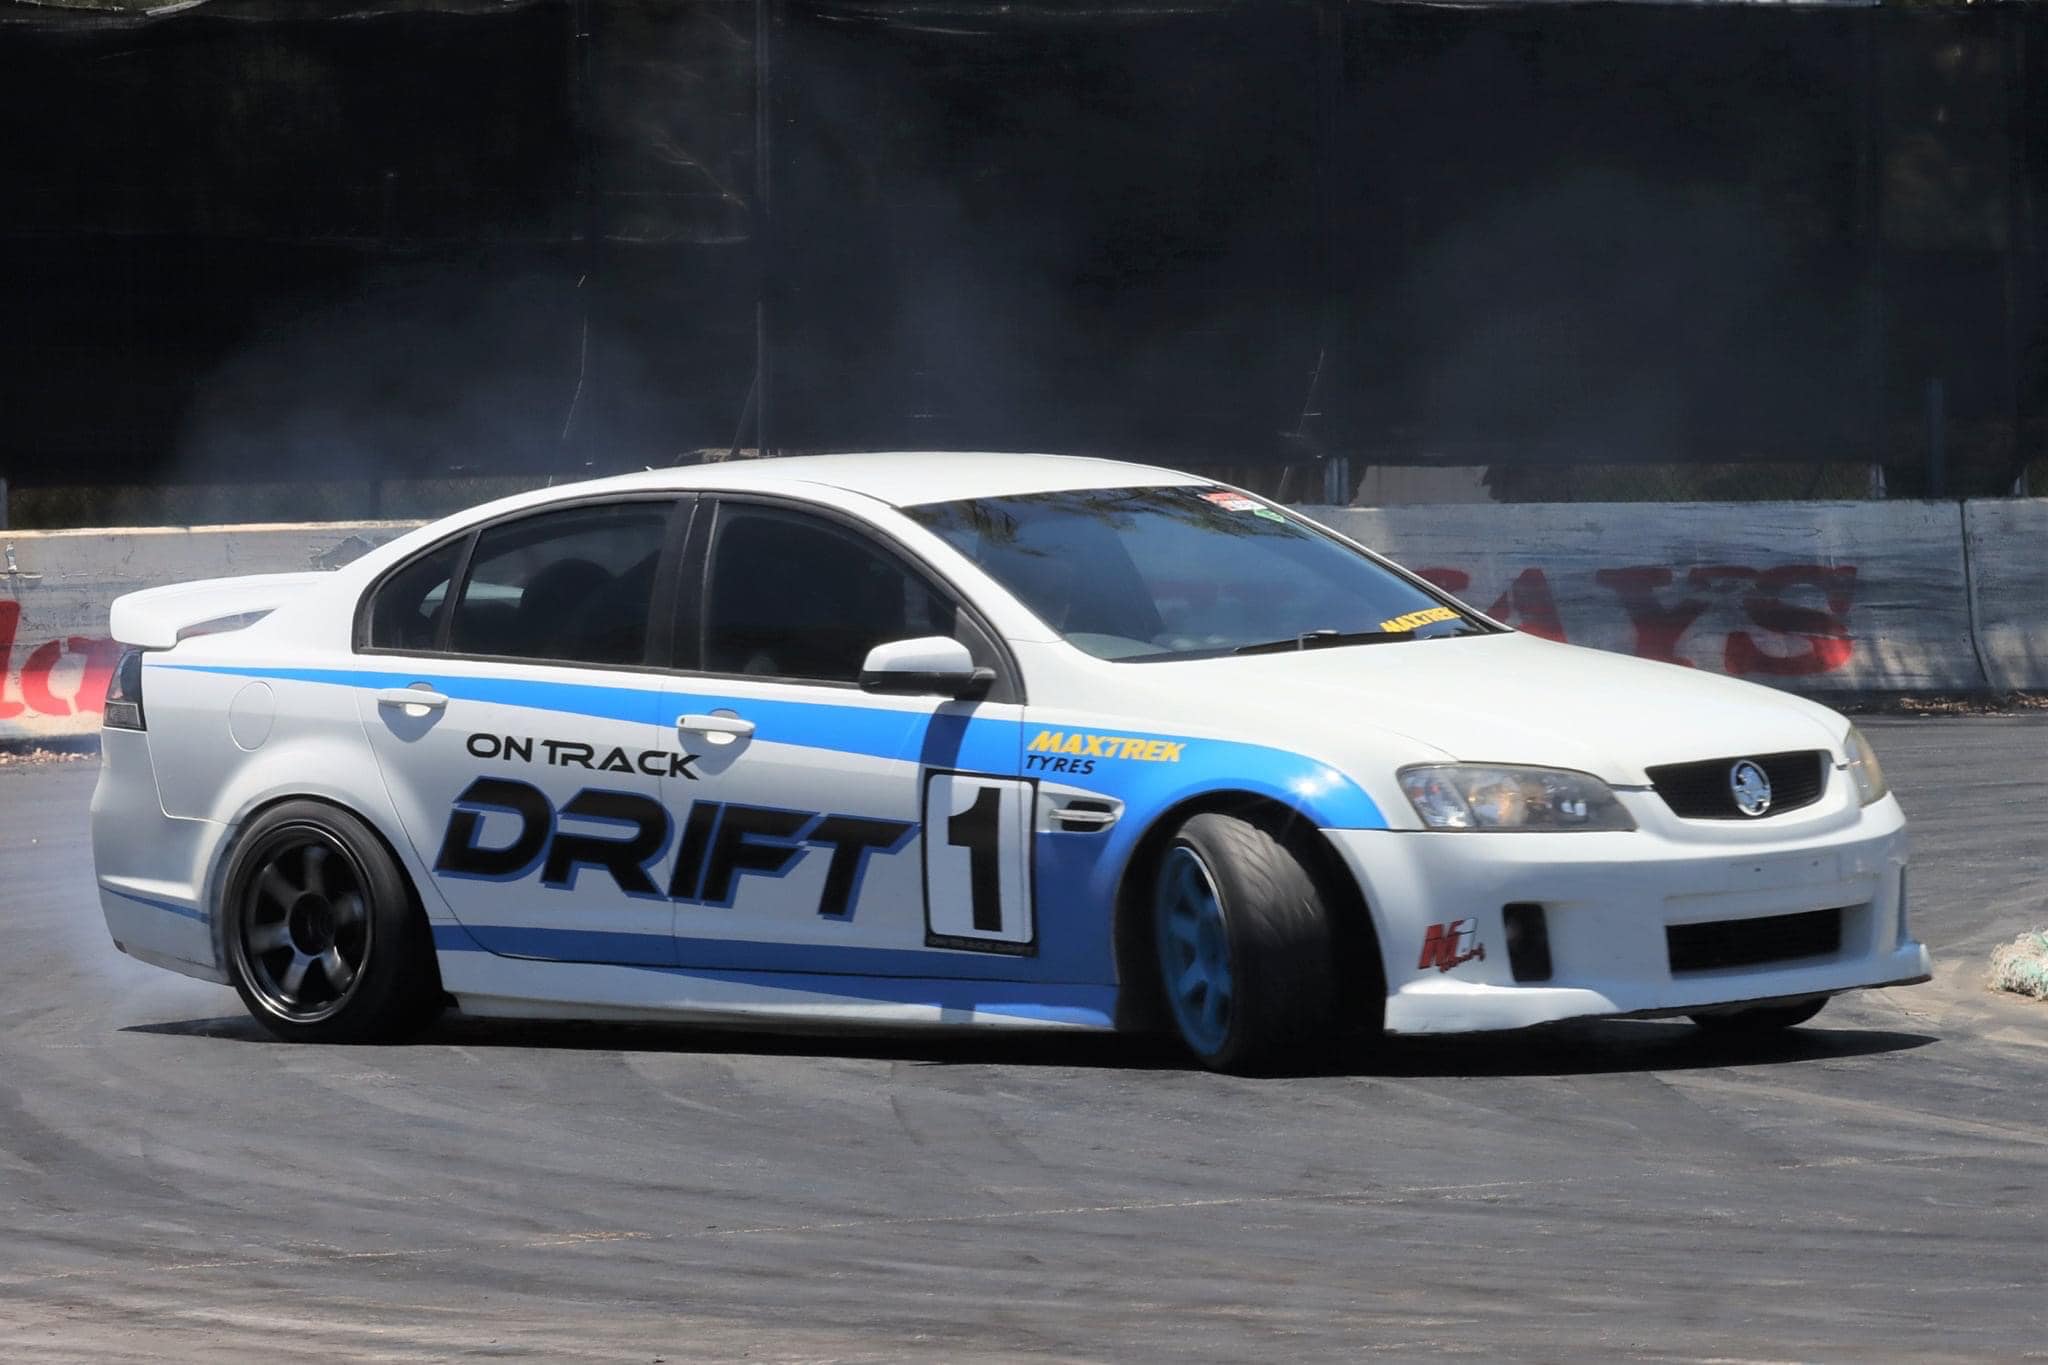 High Speed Drifting in a V8 Race Car, 2 Laps - Brisbane